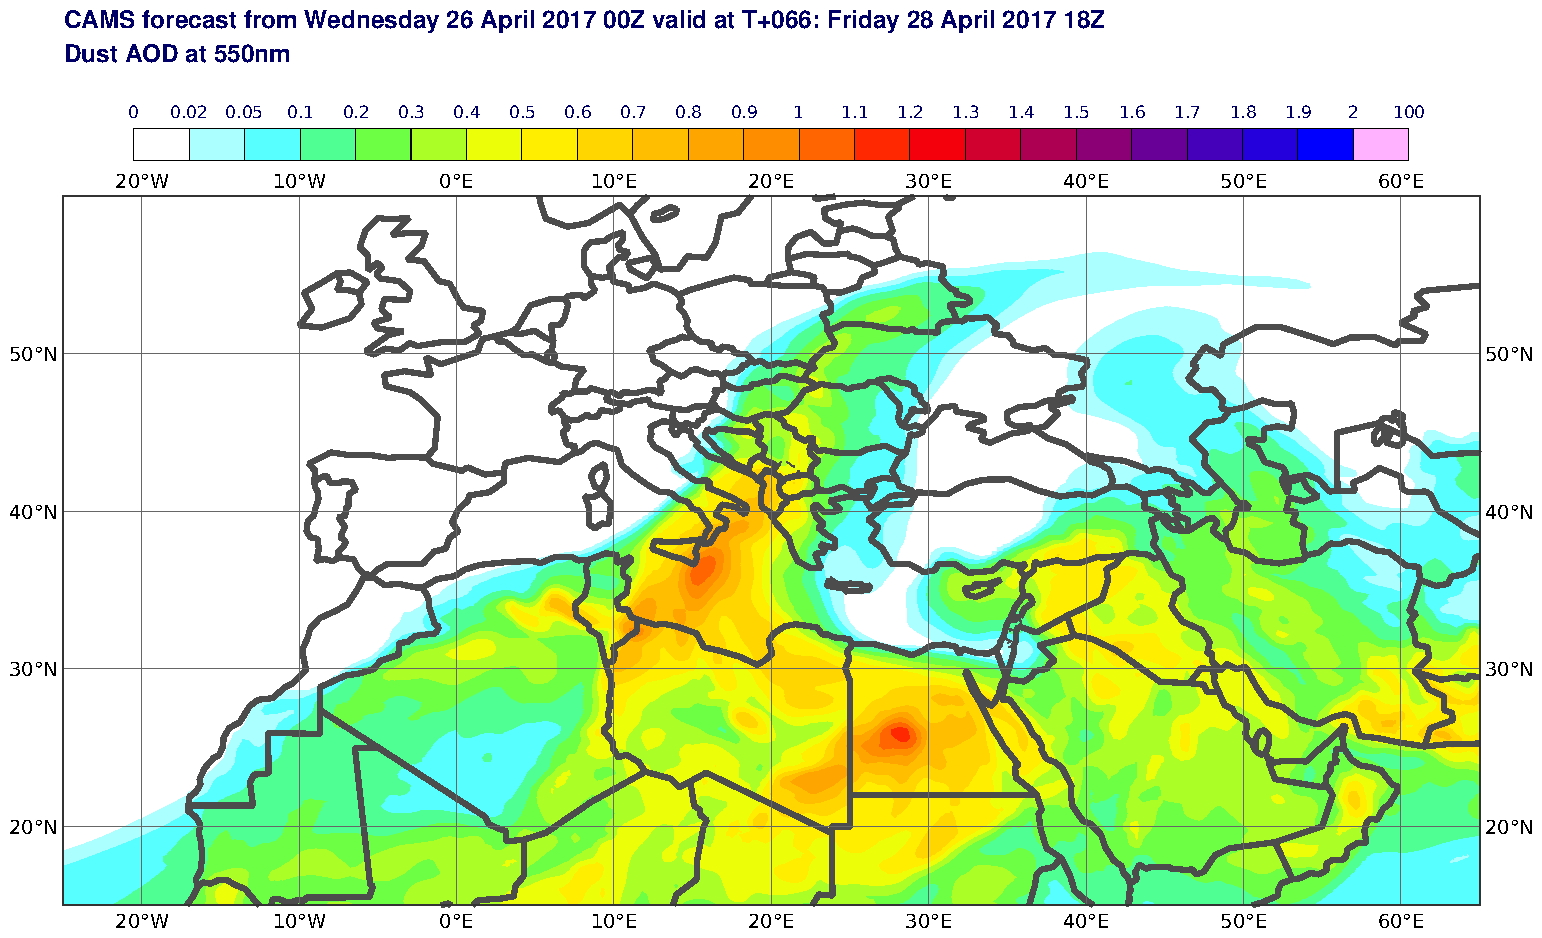 Dust AOD at 550nm valid at T66 - 2017-04-28 18:00